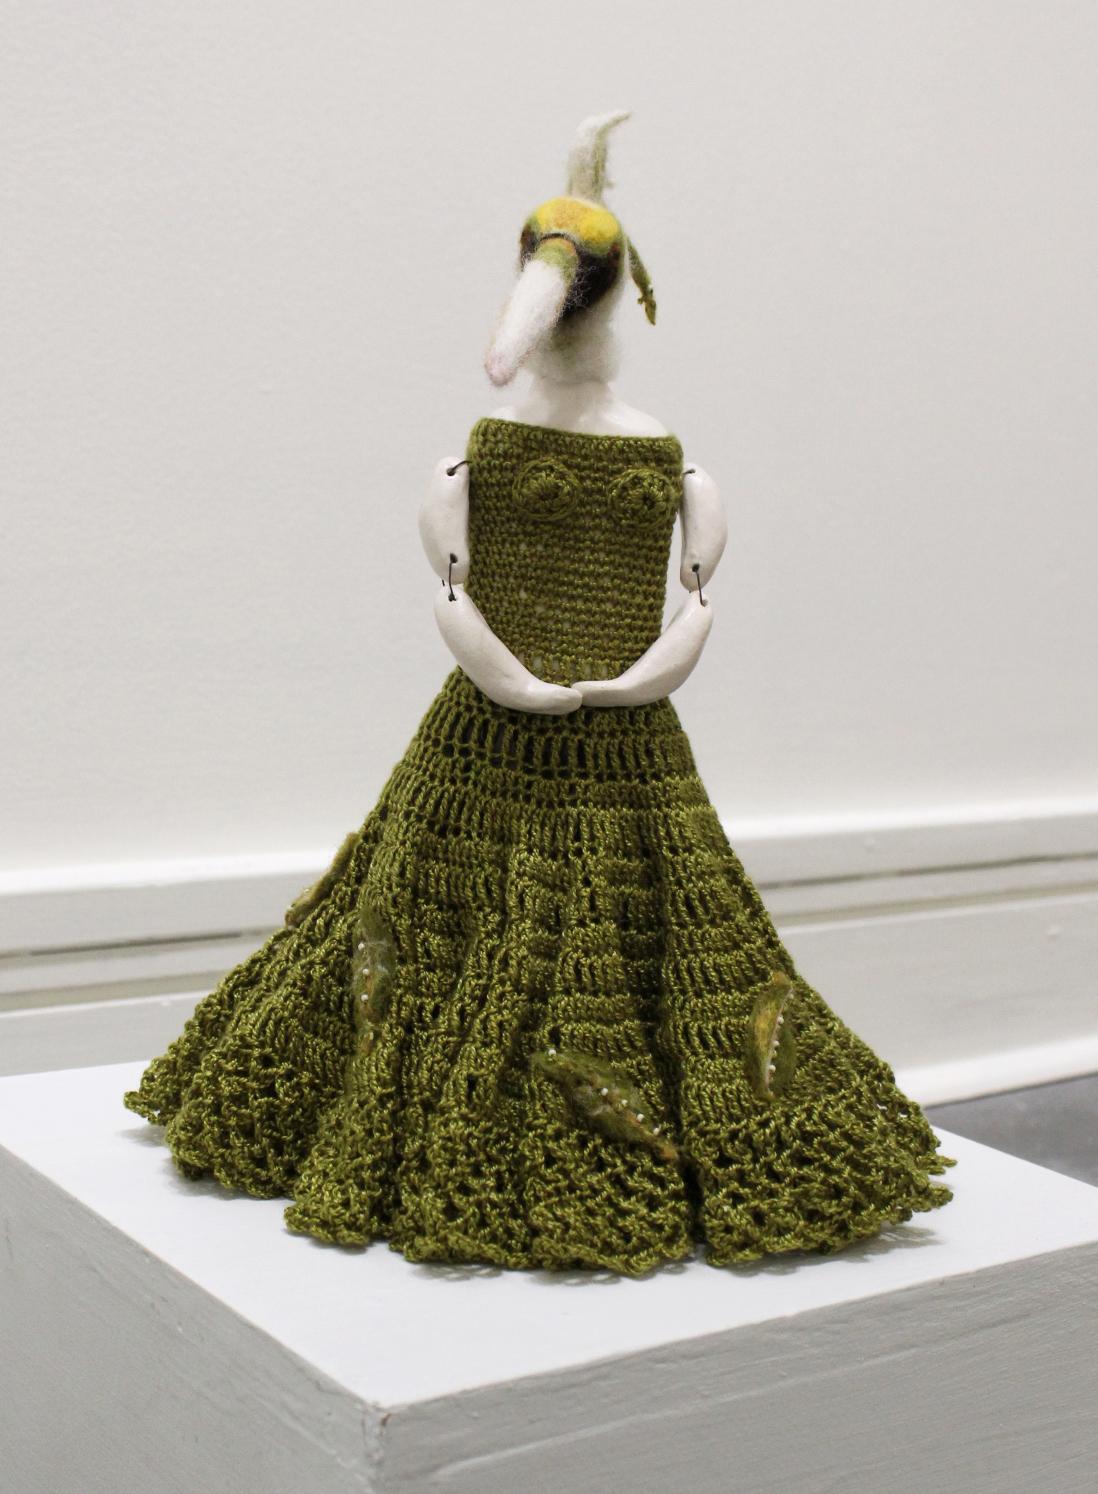 Untitled (standing bird in green dress) mixed media, small, original sculpture - Mixed Media Art by Eva Maier